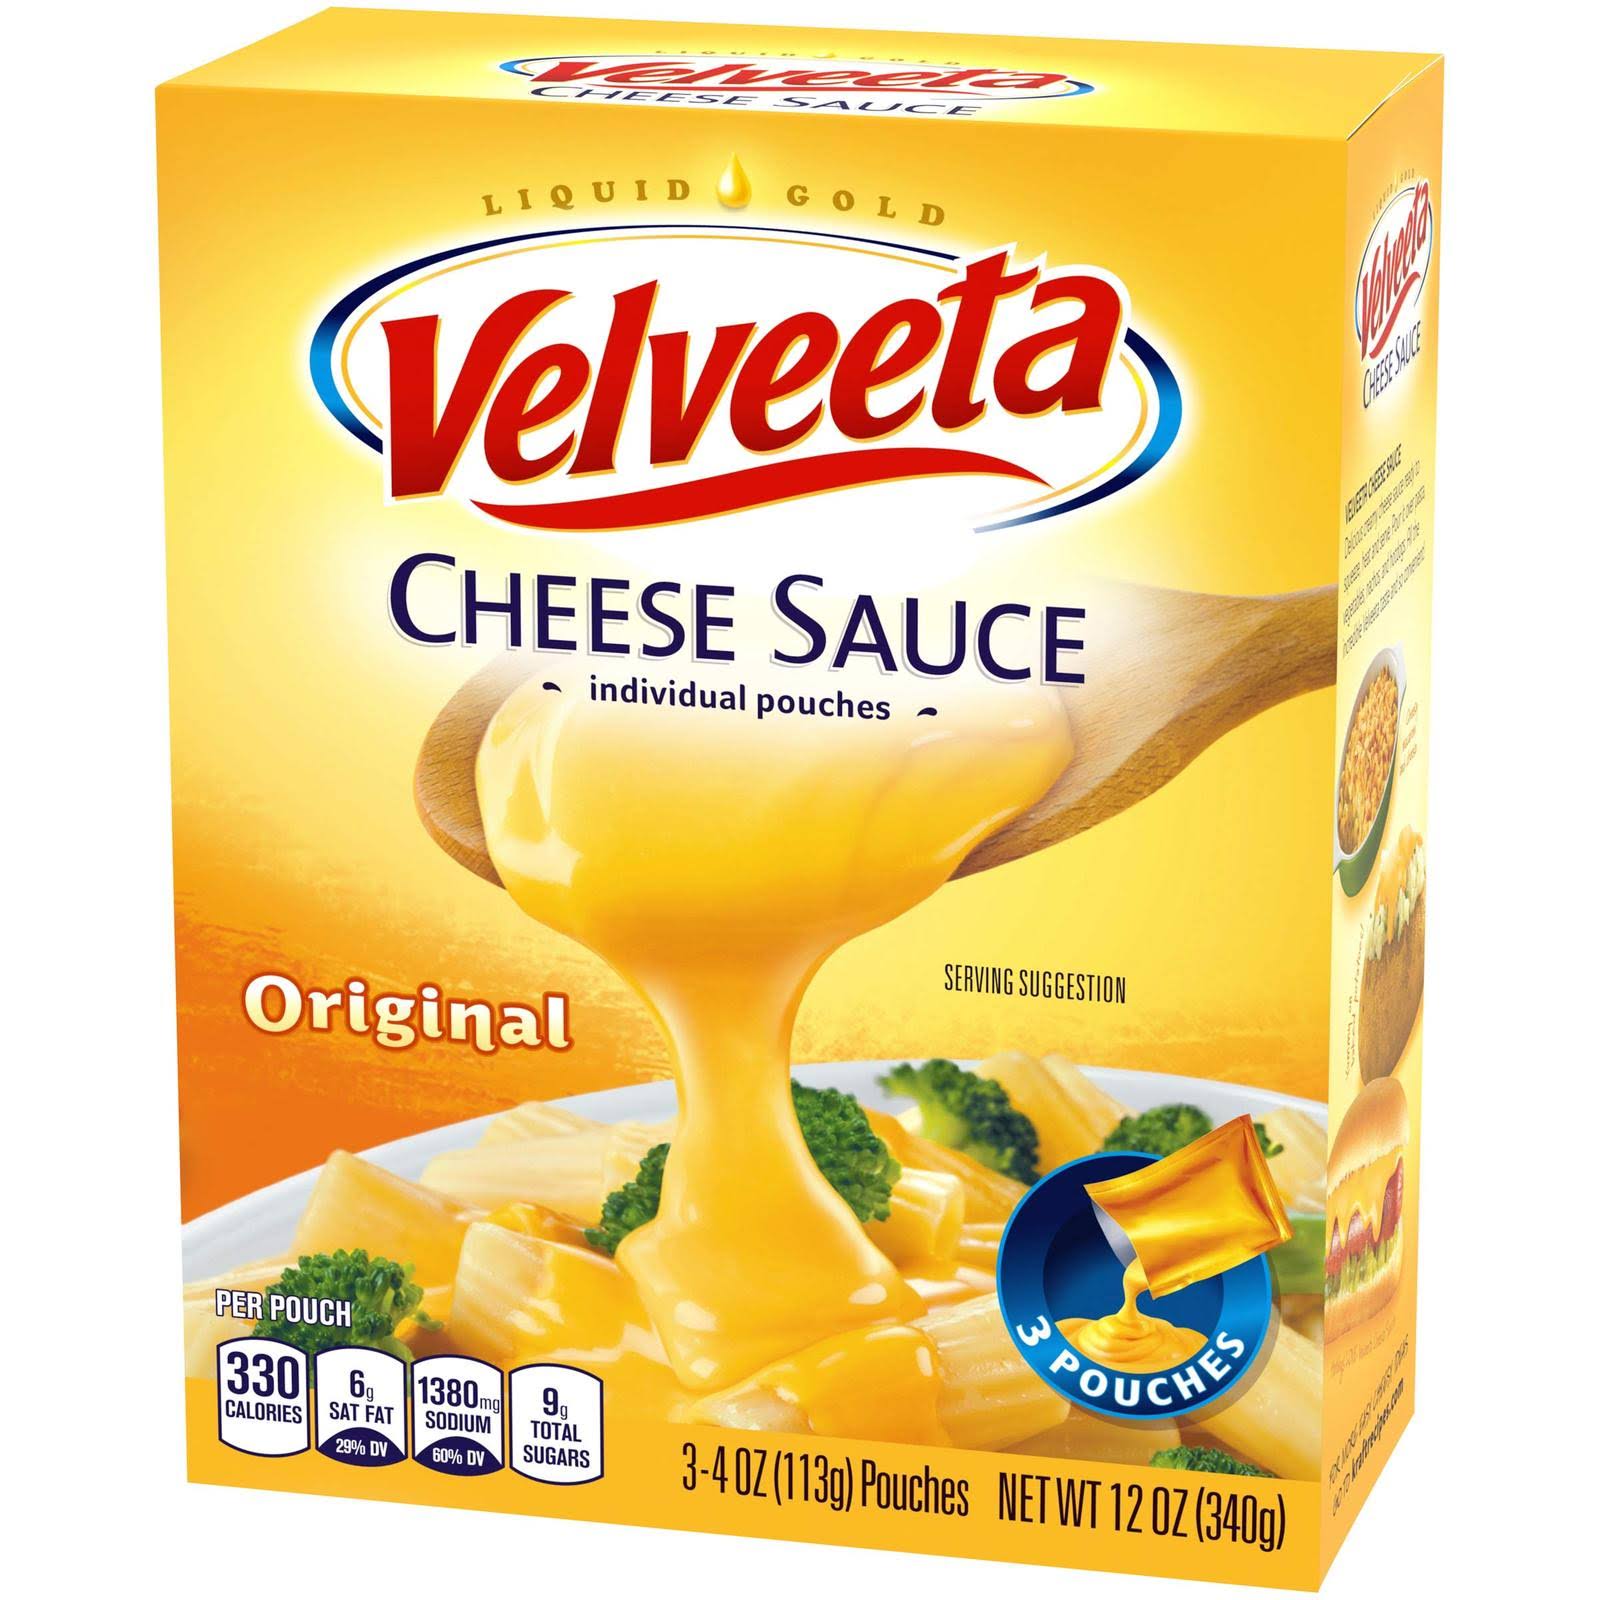 Velveeta Cheese Sauce, Original - 3 pack, 4 oz pouches